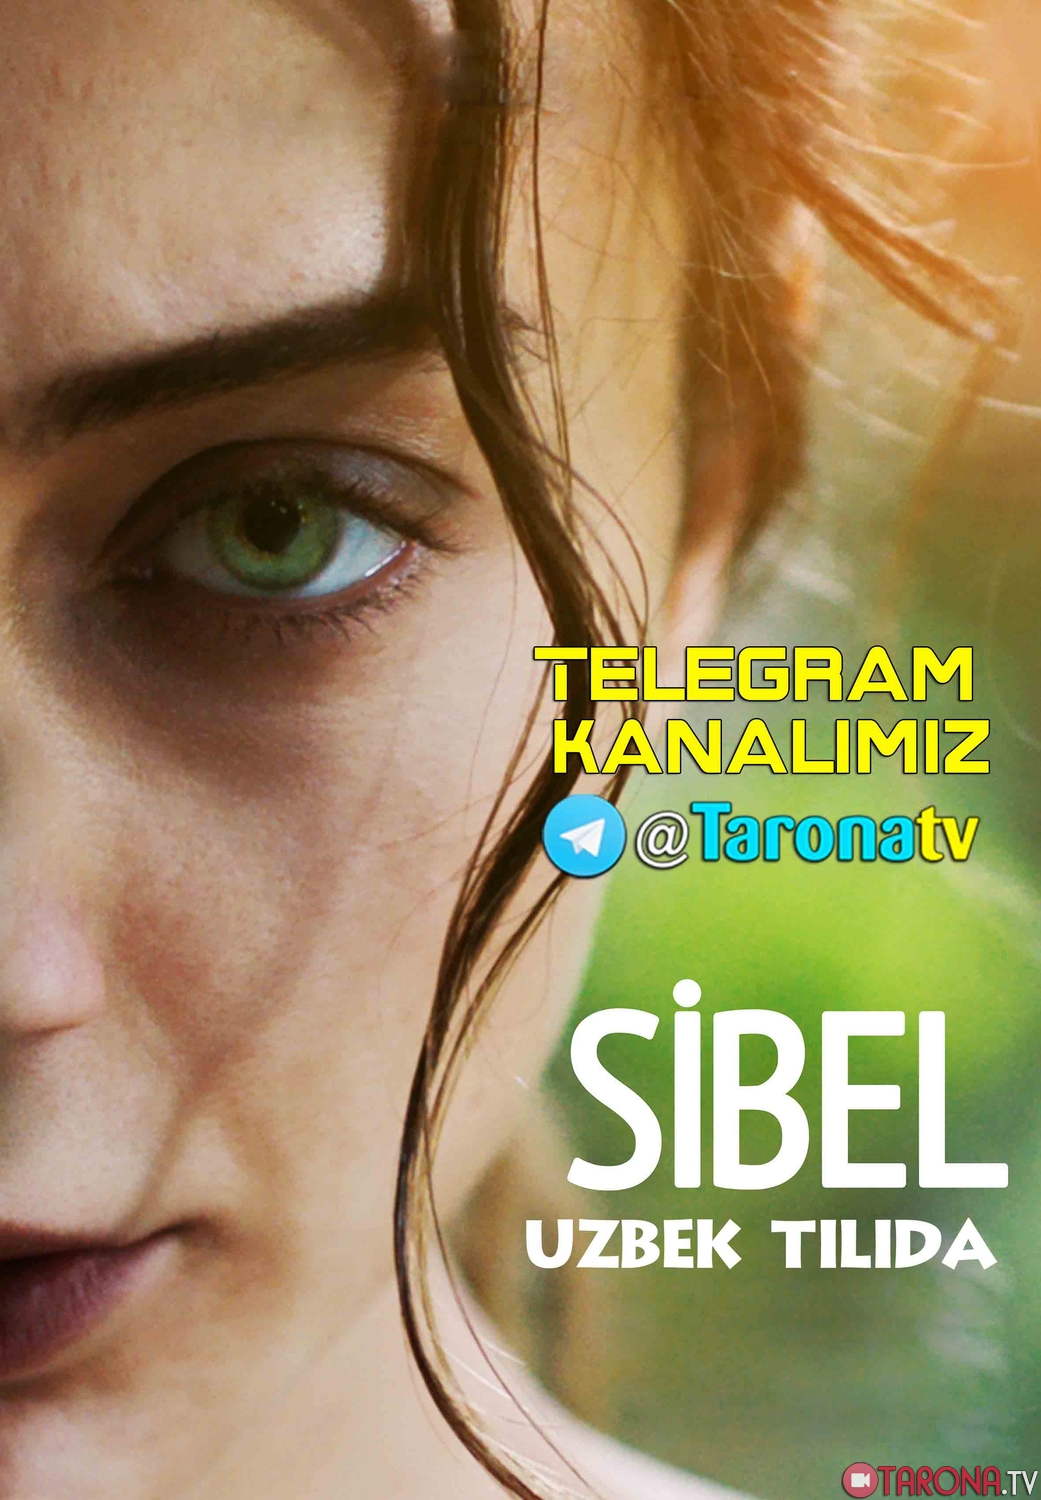 Sibel Turk kinosi, Uzbek tilida 2018